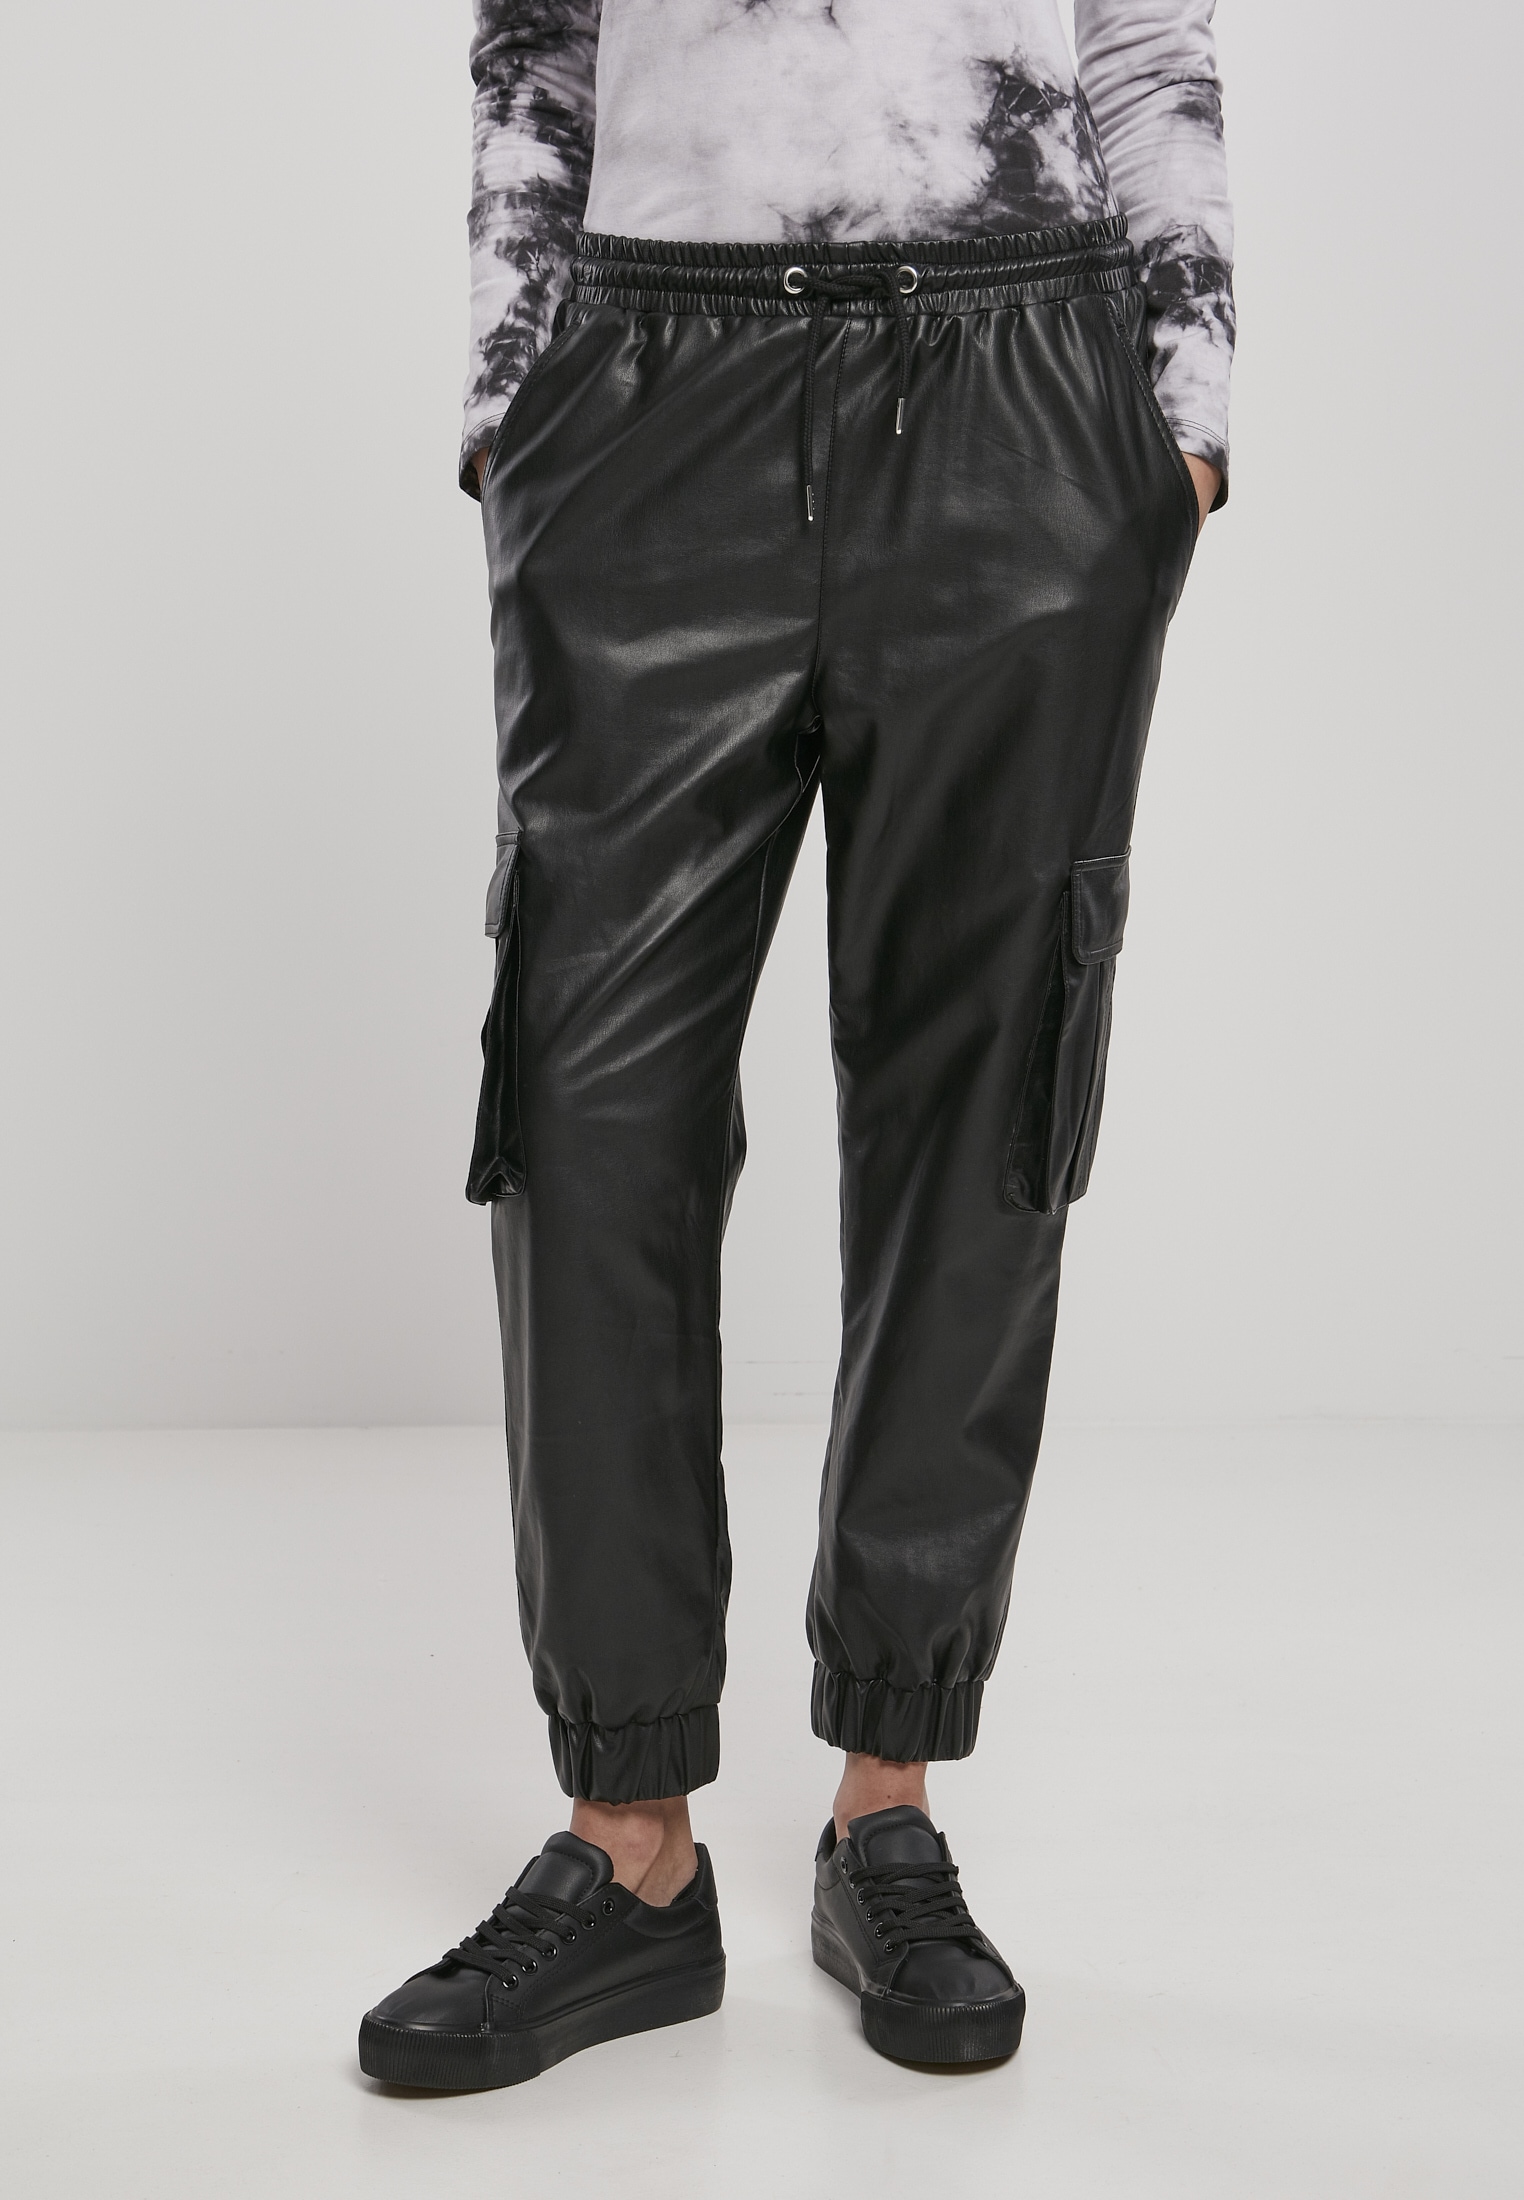 Leather »Damen walking (1 I\'m CLASSICS kaufen Cargohose | Faux Pants«, Ladies tlg.) URBAN online Cargo